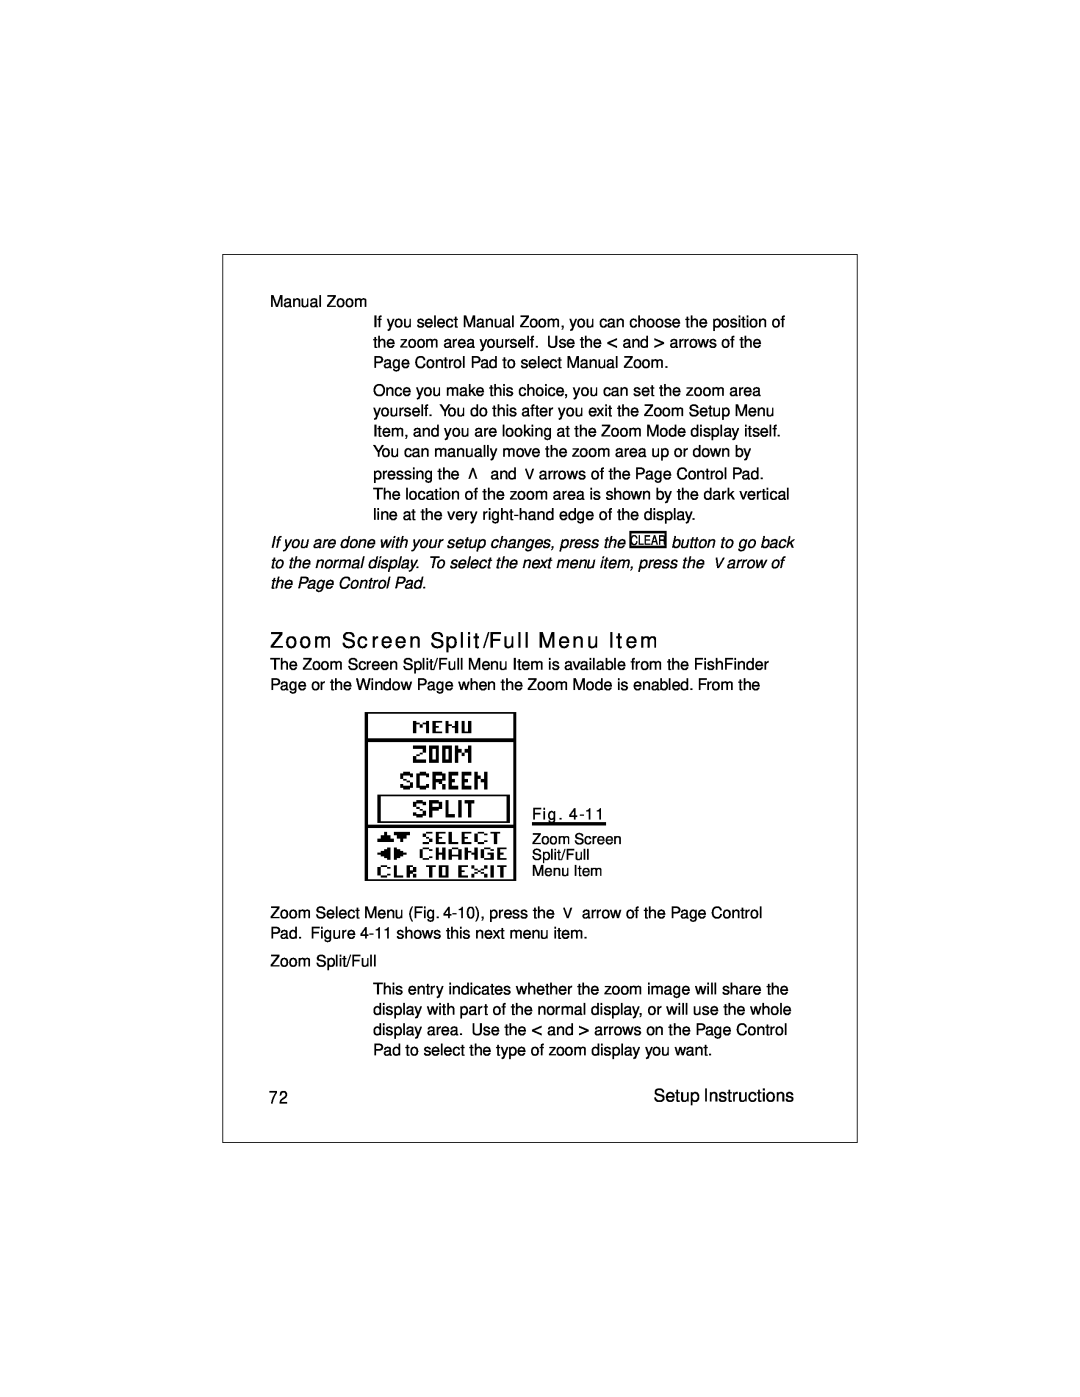 Raymarine L470 instruction manual Zoom Screen Split/Full Menu Item, Setup Instructions 